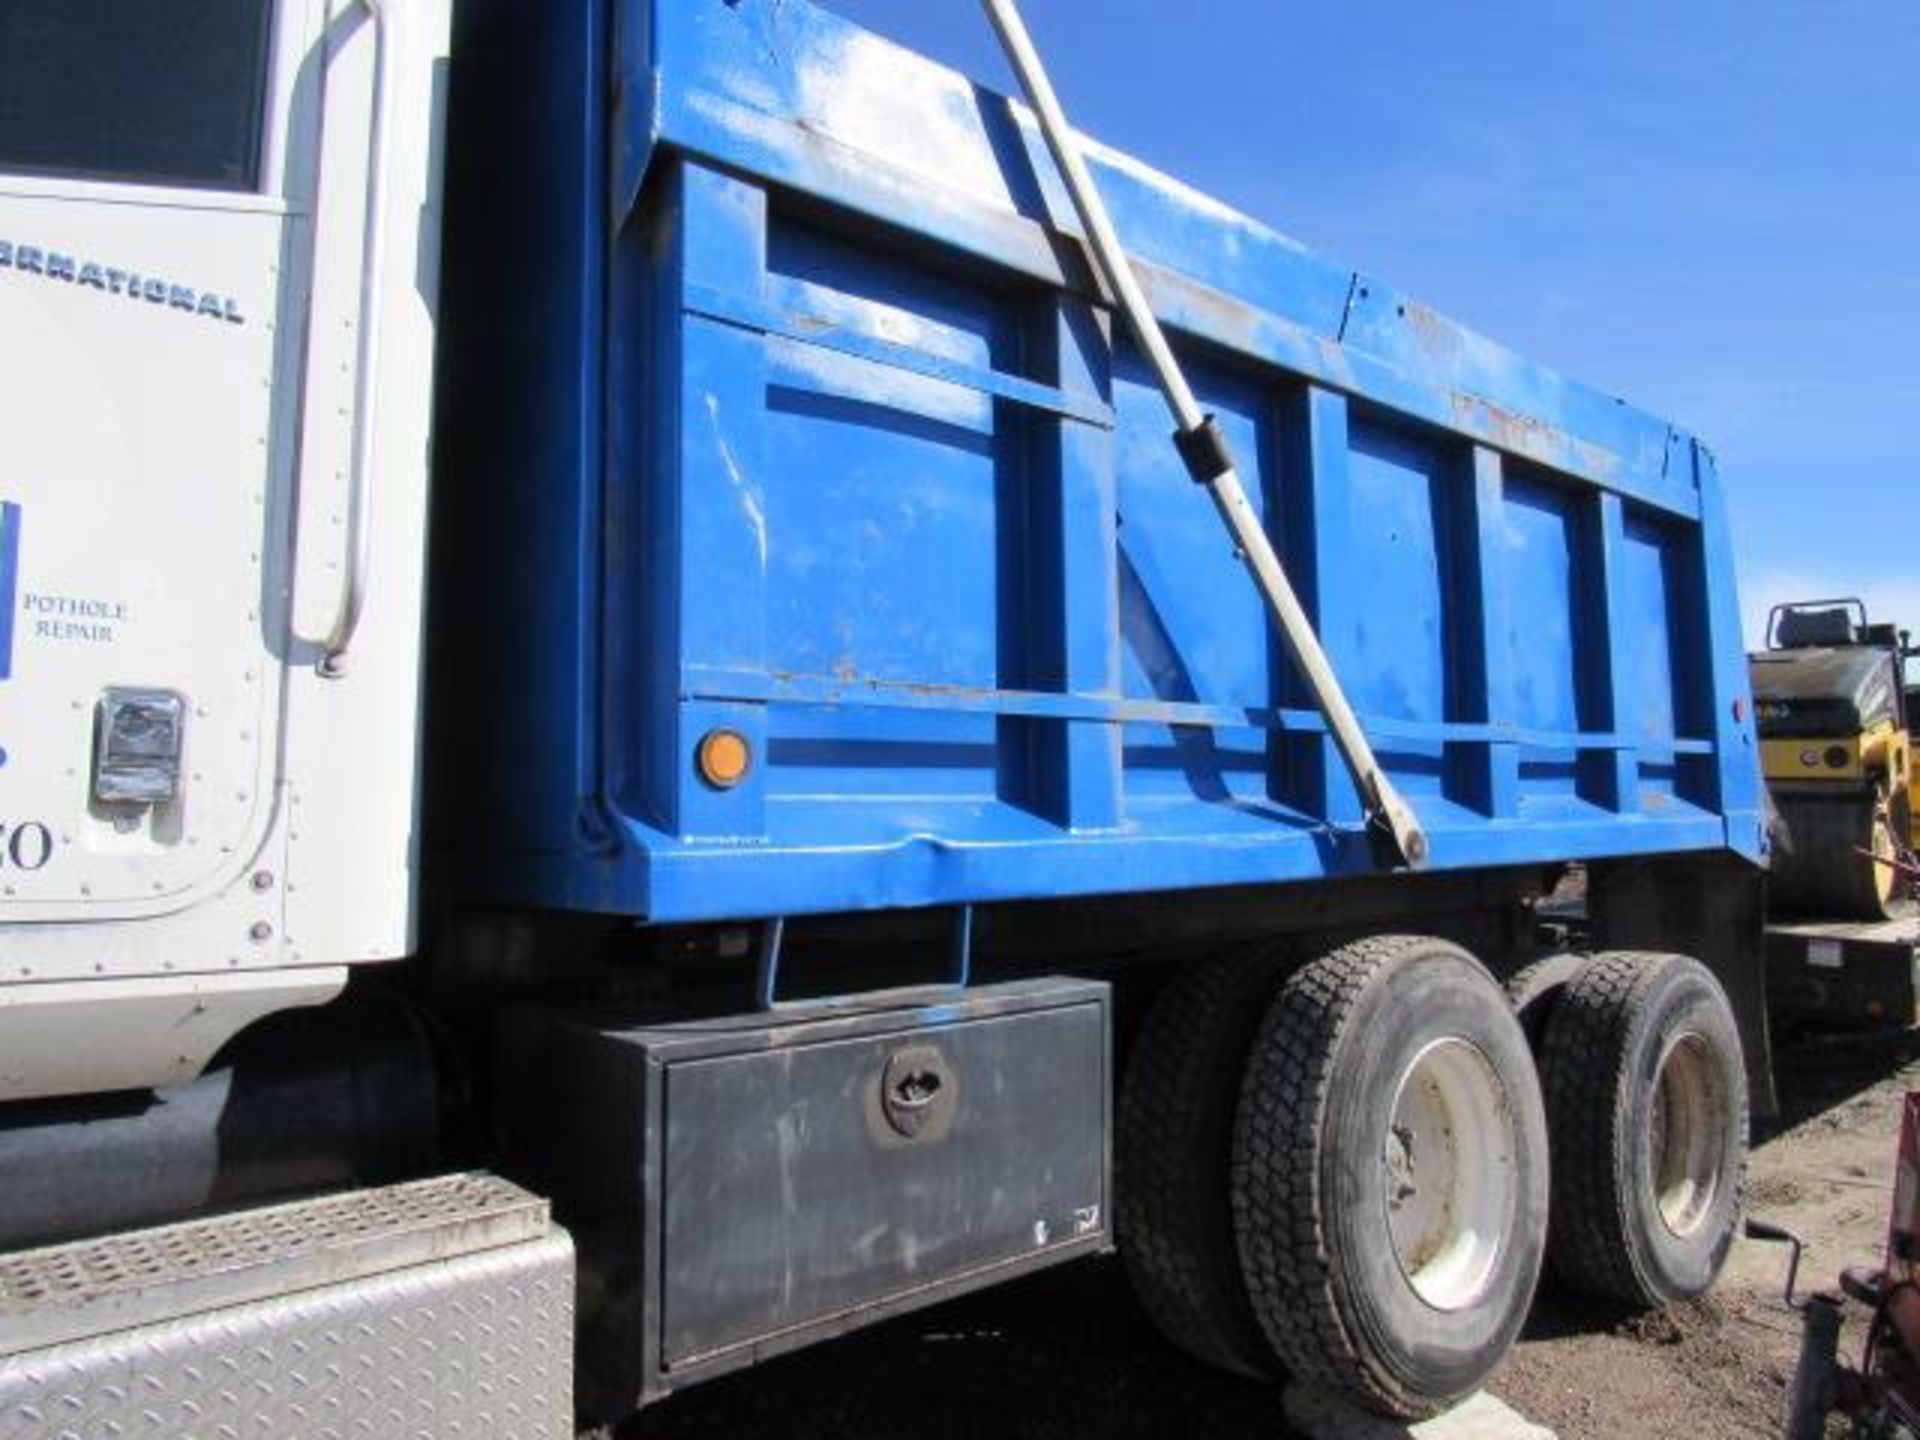 2005 International 5600 Dump Truck 6 x 4, VIN # 1HTXHAPR755031266, 18-Speed Manual Eaton Fuller - Image 3 of 9